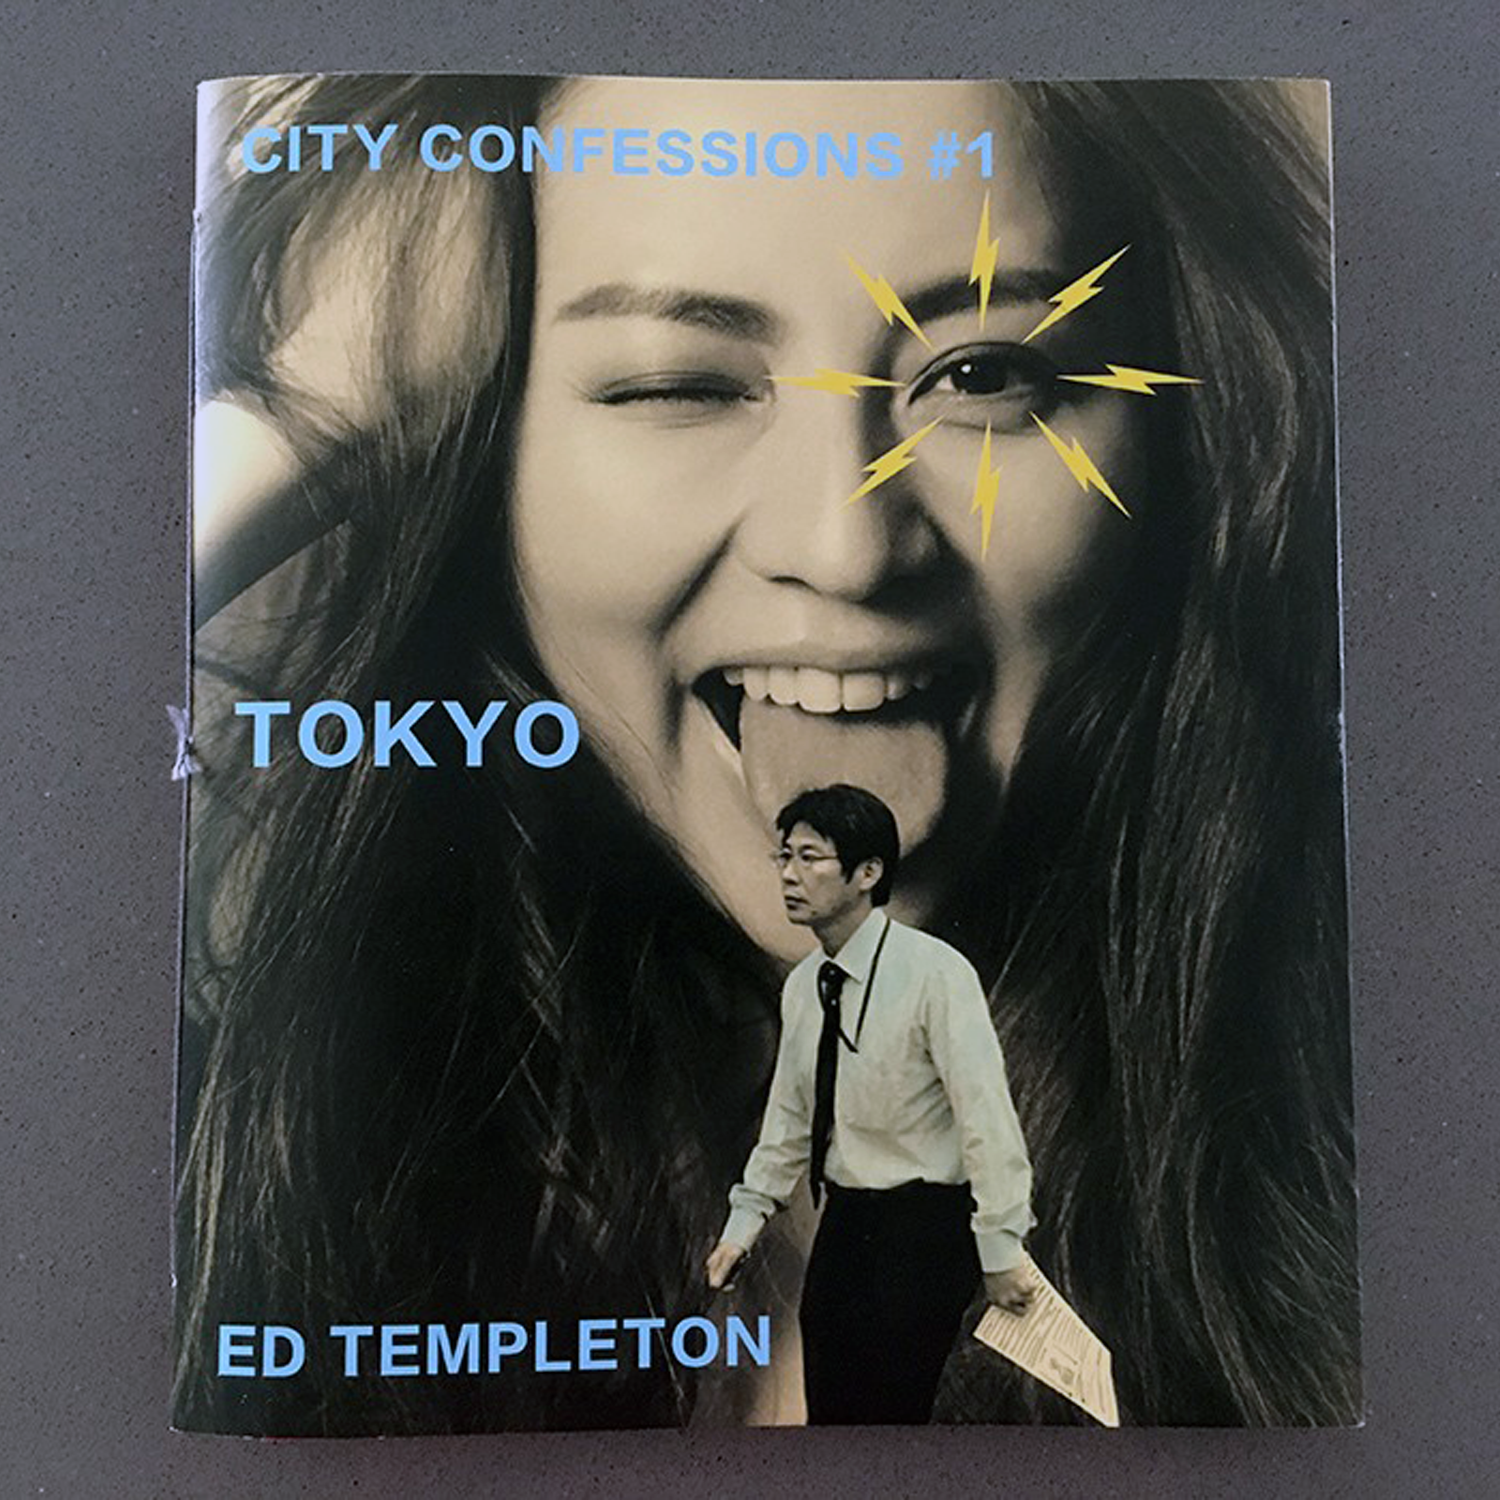 City Confessions #1 Tokyo